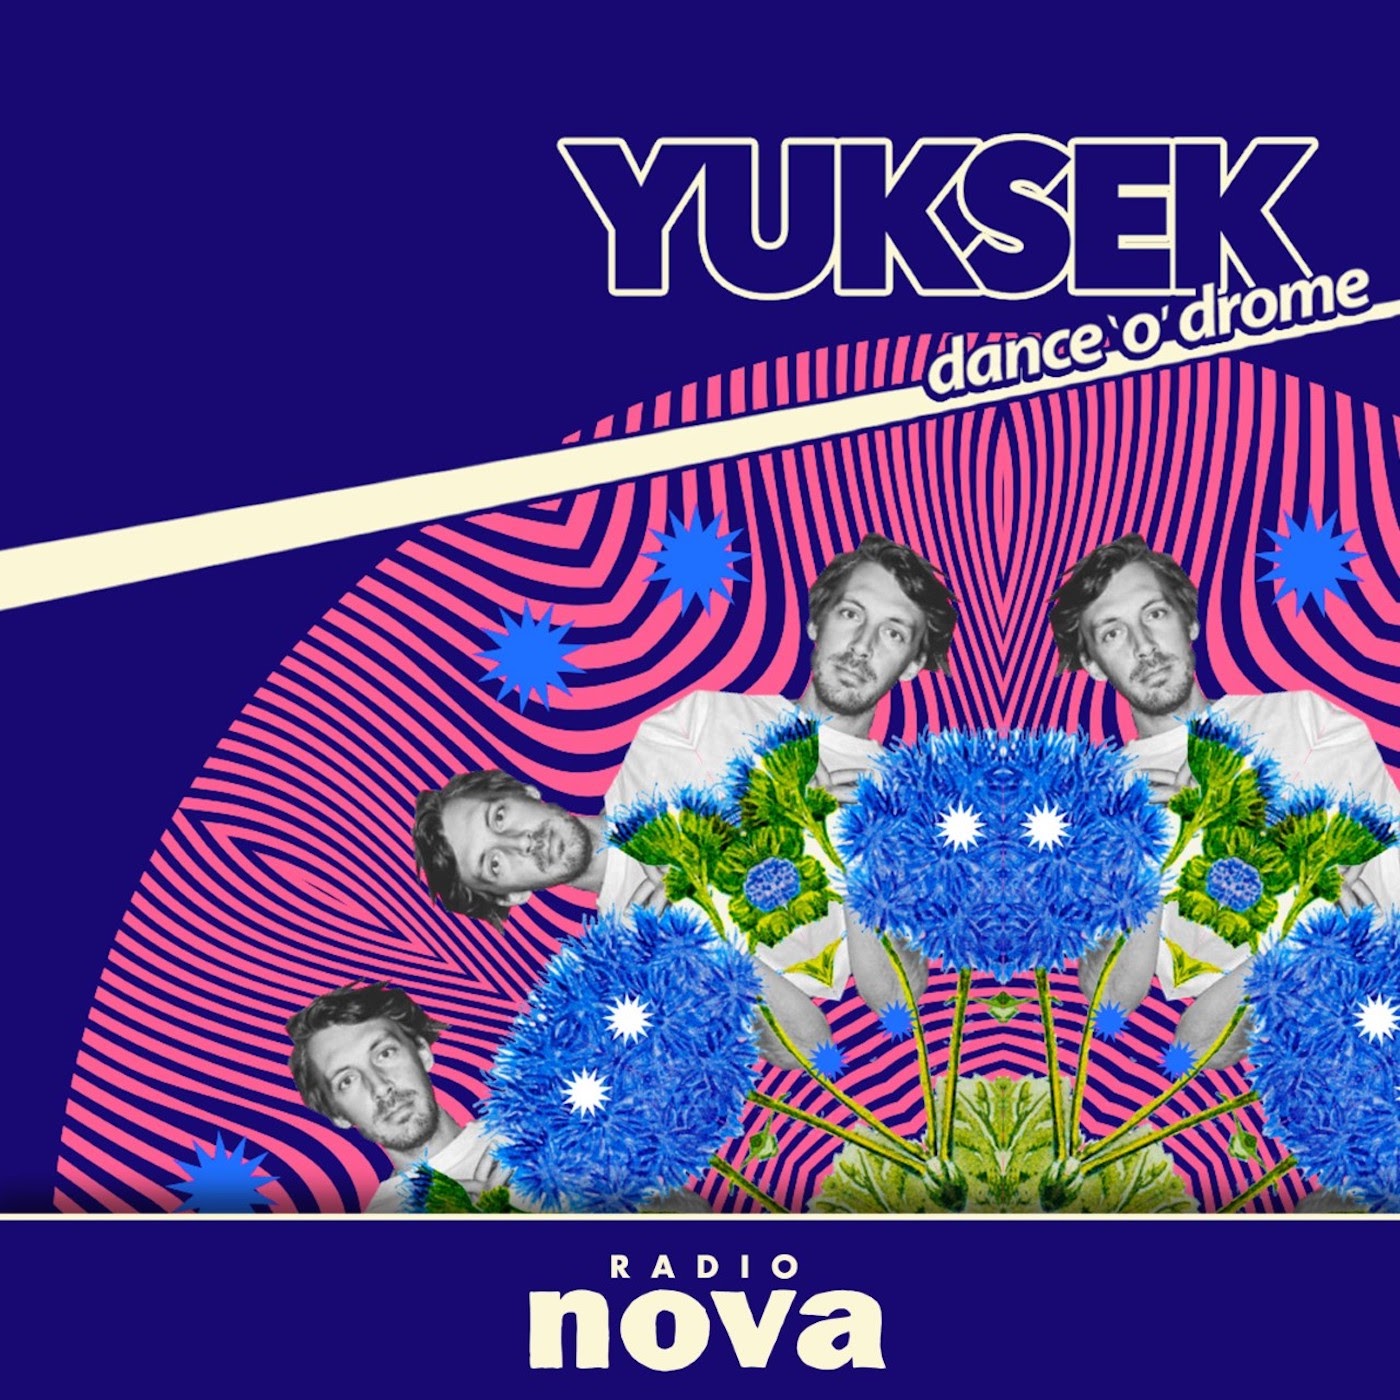 « Dance’o’drome »  #14 : le mix de Yuksek, avec Clara 3000, sur Radio Nova